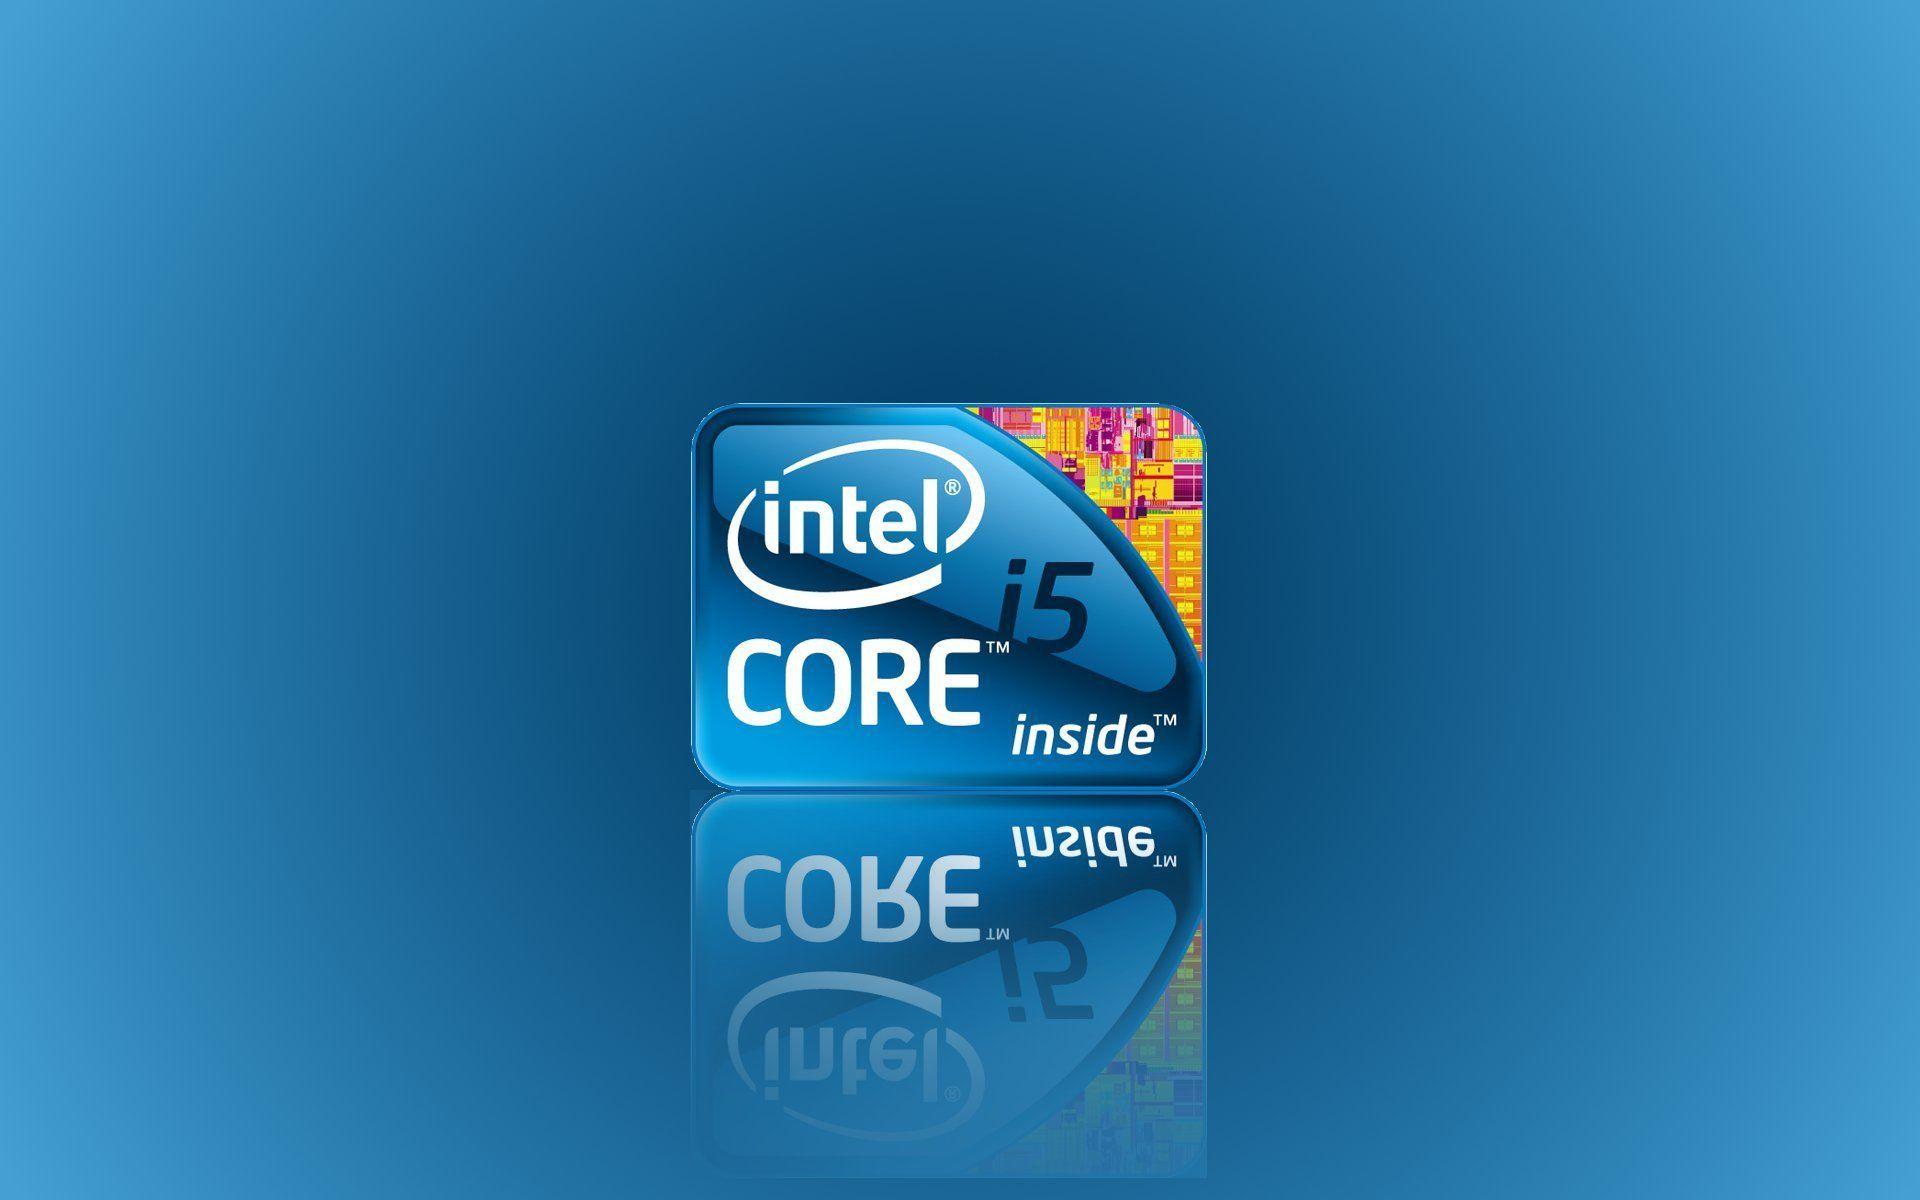 Intel I5 Wallpaper. Business Intel Wallpaper, Intel I5 Wallpaper and Intel Extreme Wallpaper